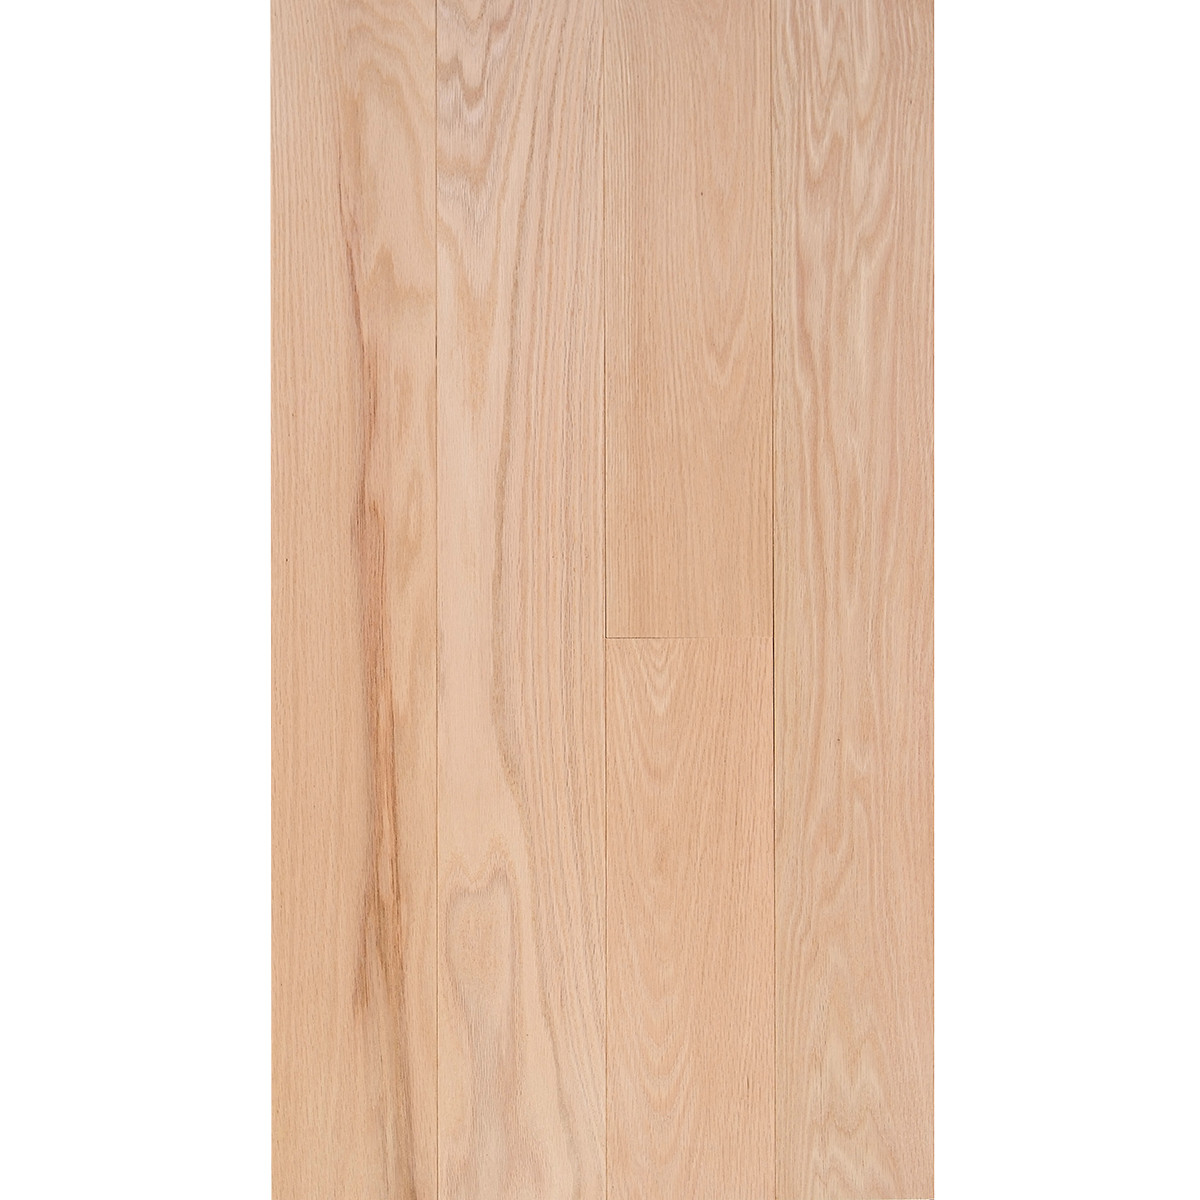 15 attractive Hardwood Floor Finish Options 2024 free download hardwood floor finish options of red oak 3 4 x 5 select grade flooring with fs 5 redoak select em flooring